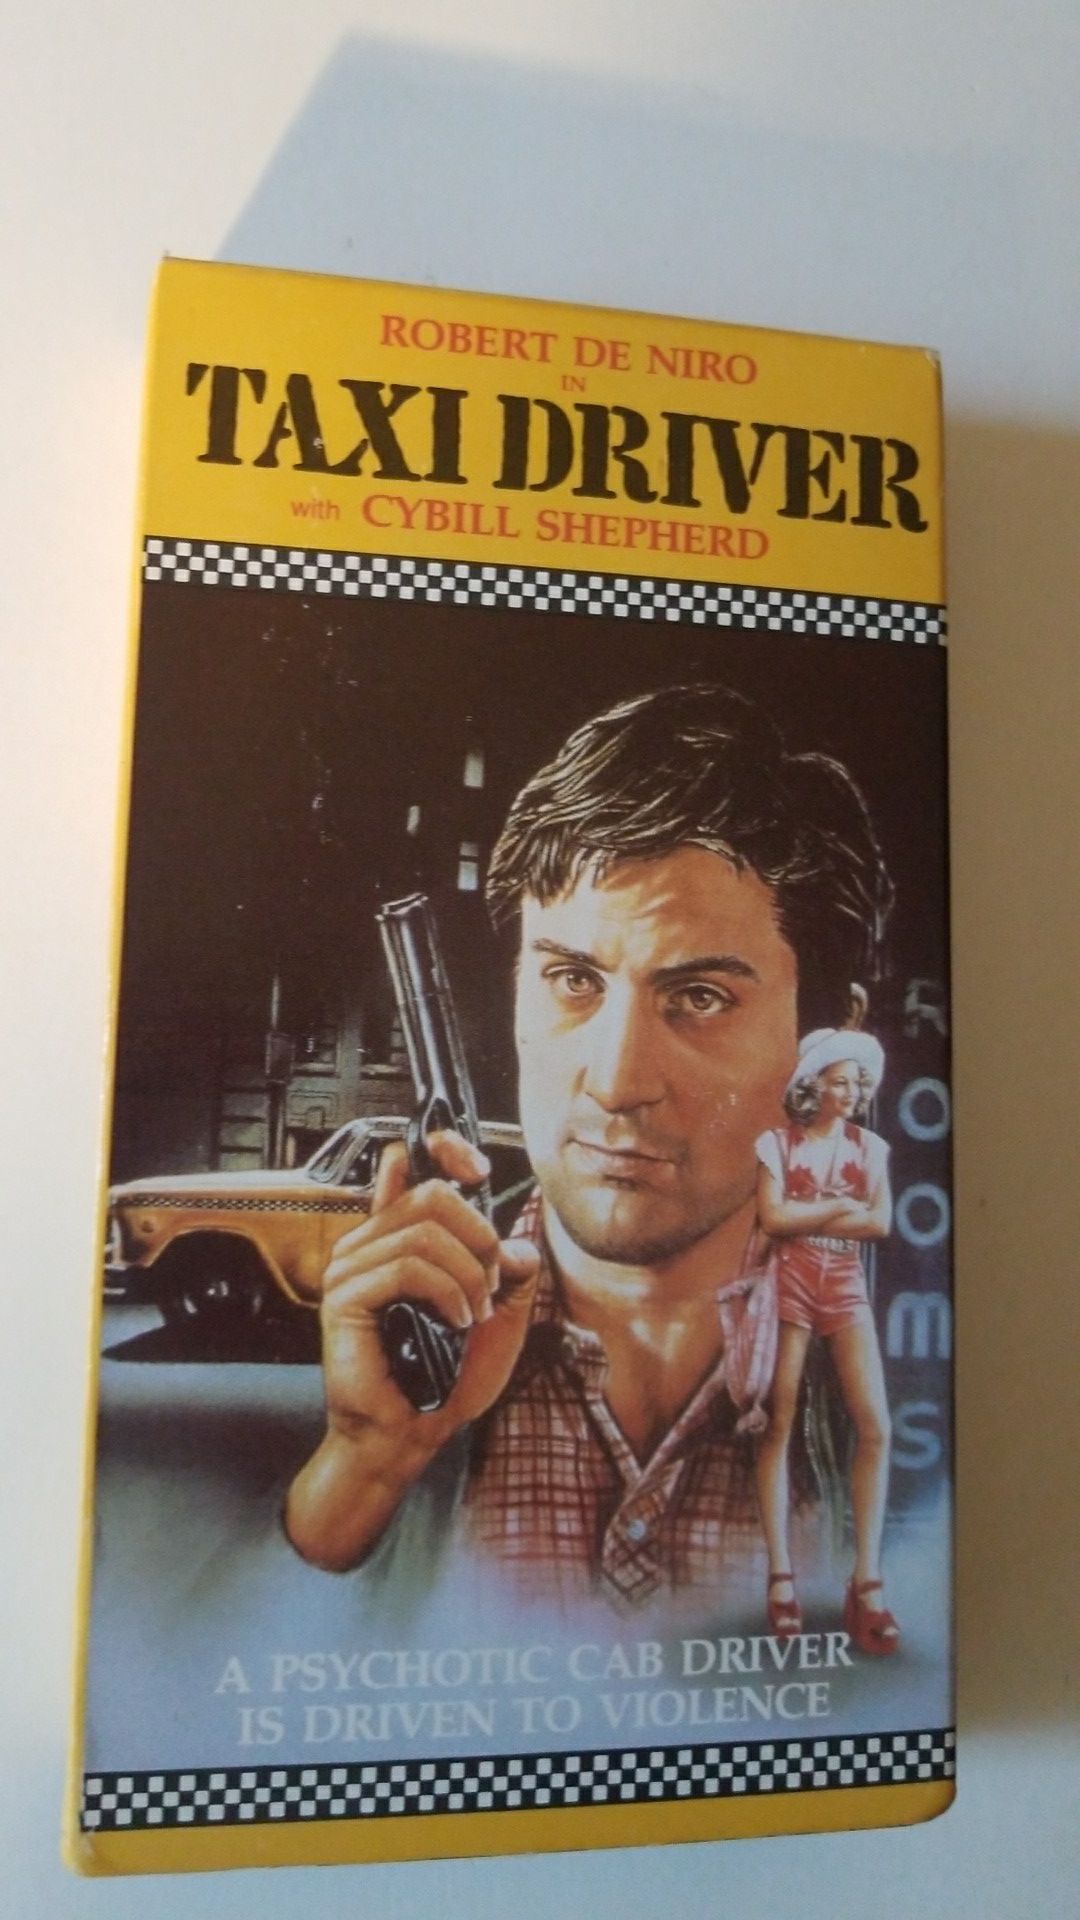 Robert deniro taxi driver vhs movie